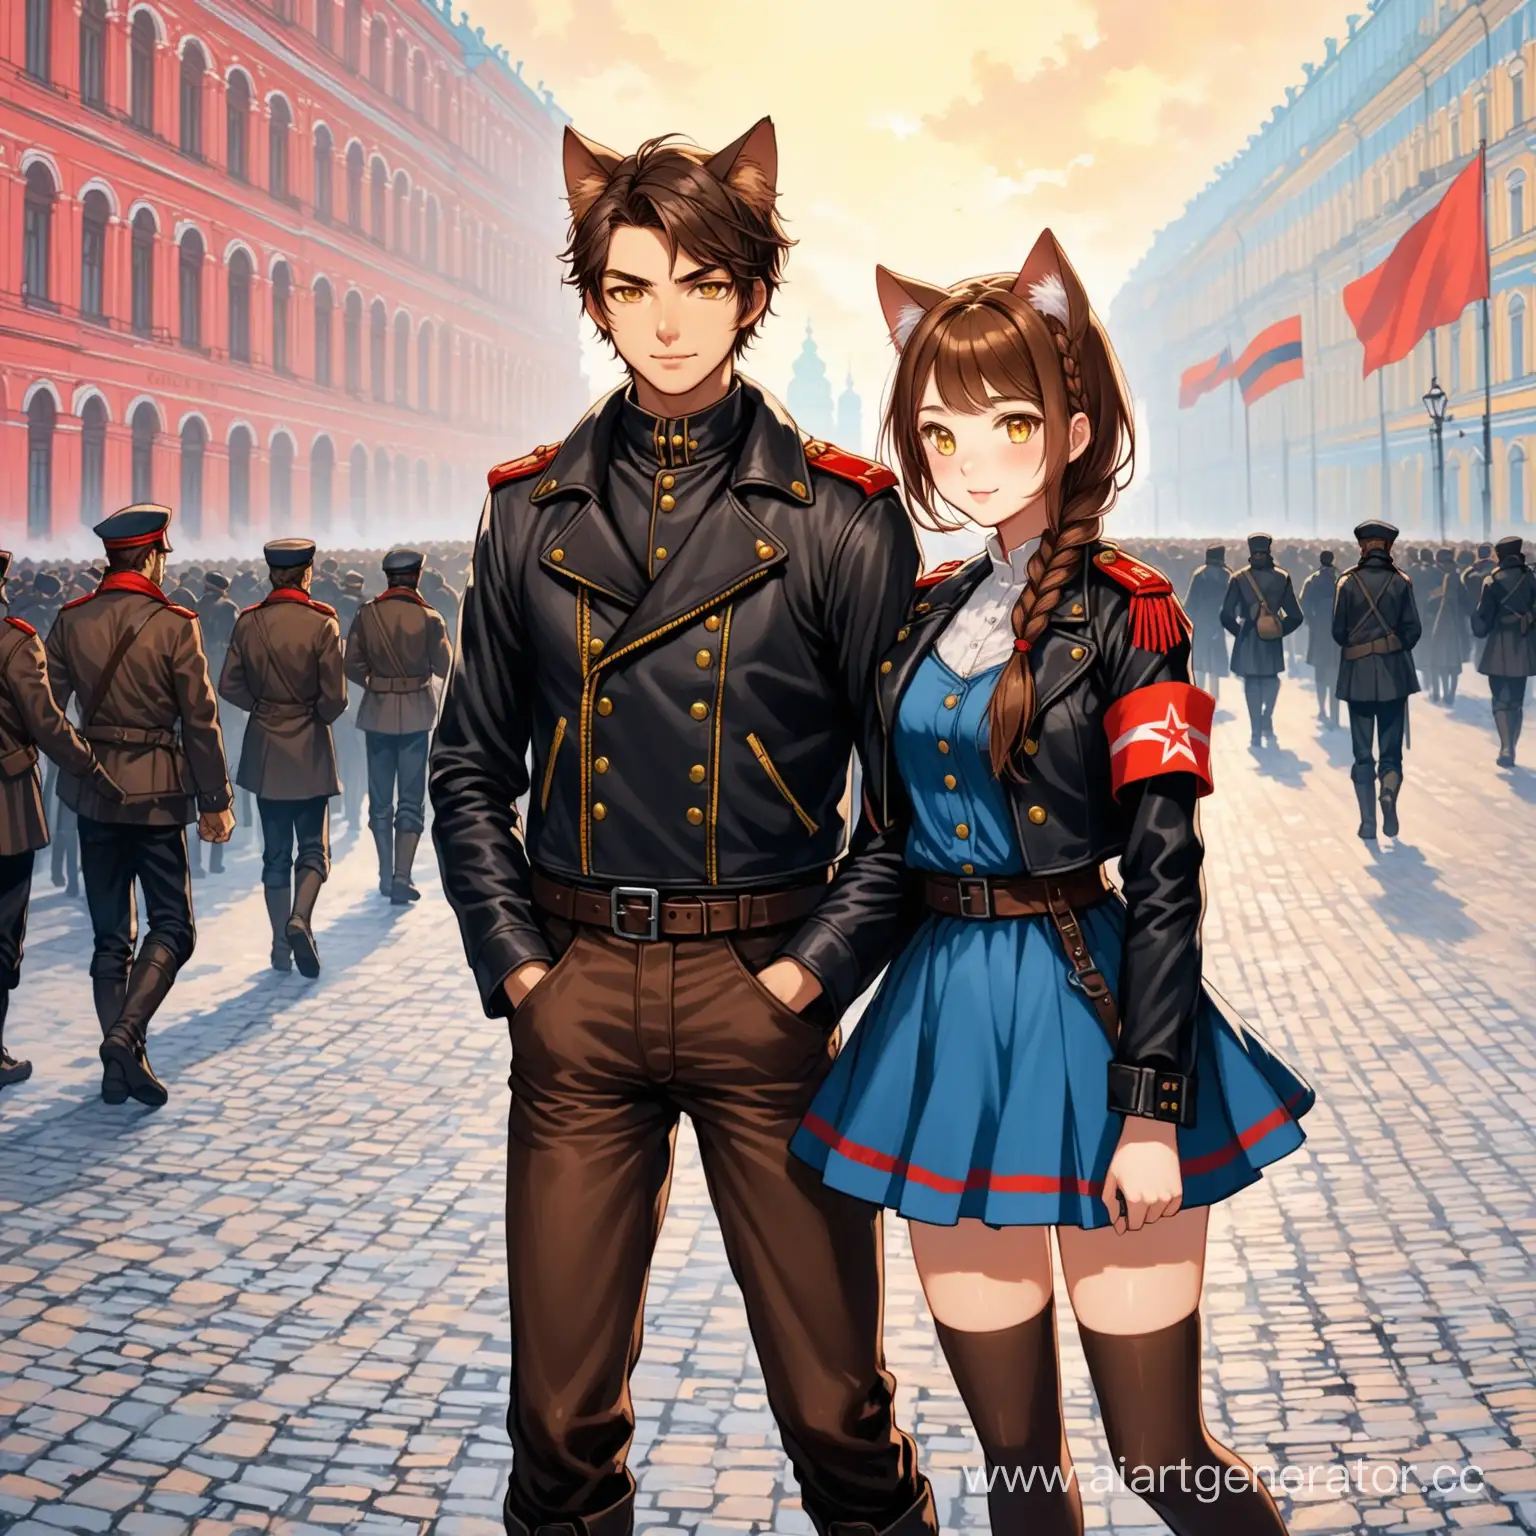 Catgirl-and-Boyfriend-Amidst-October-Revolution-in-SaintPetersburg